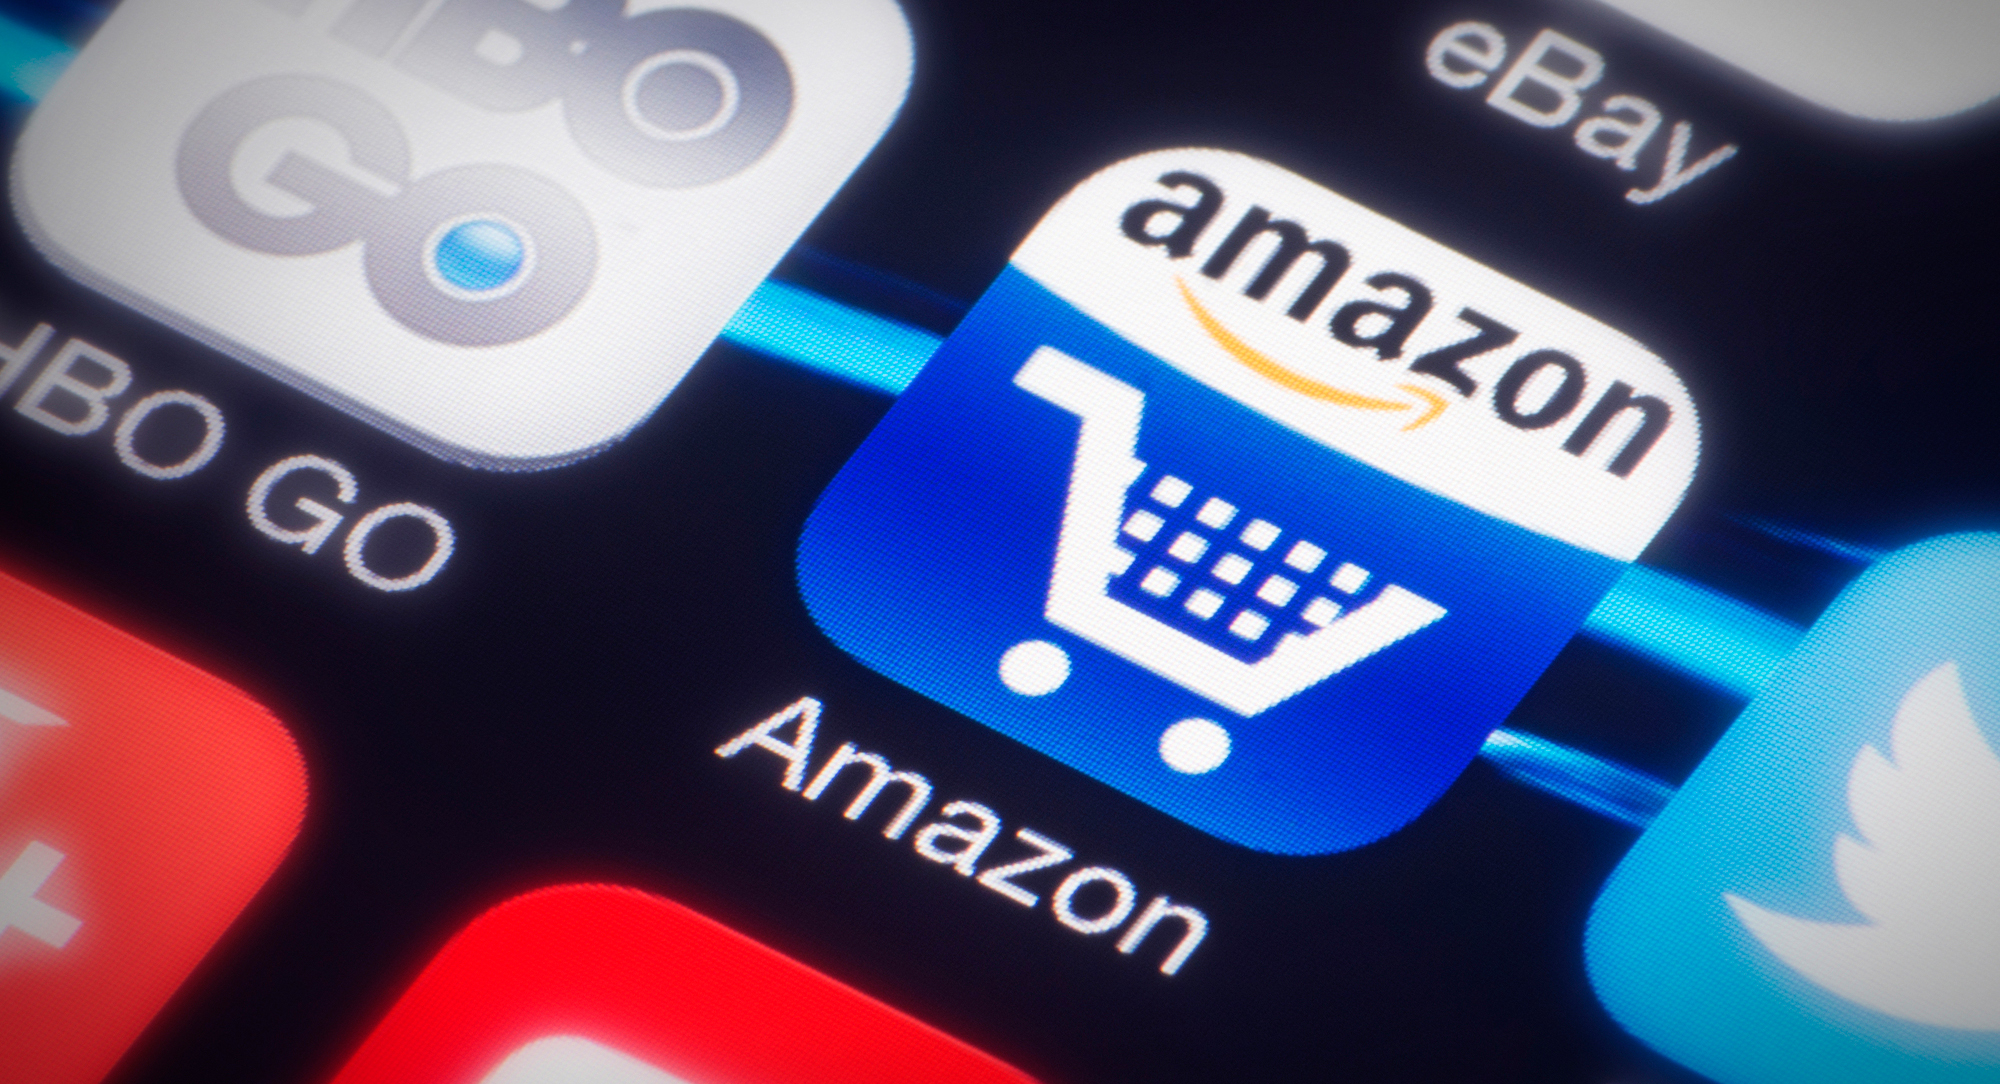 Amazon Sponsored Brand Video eCommerce Case Study